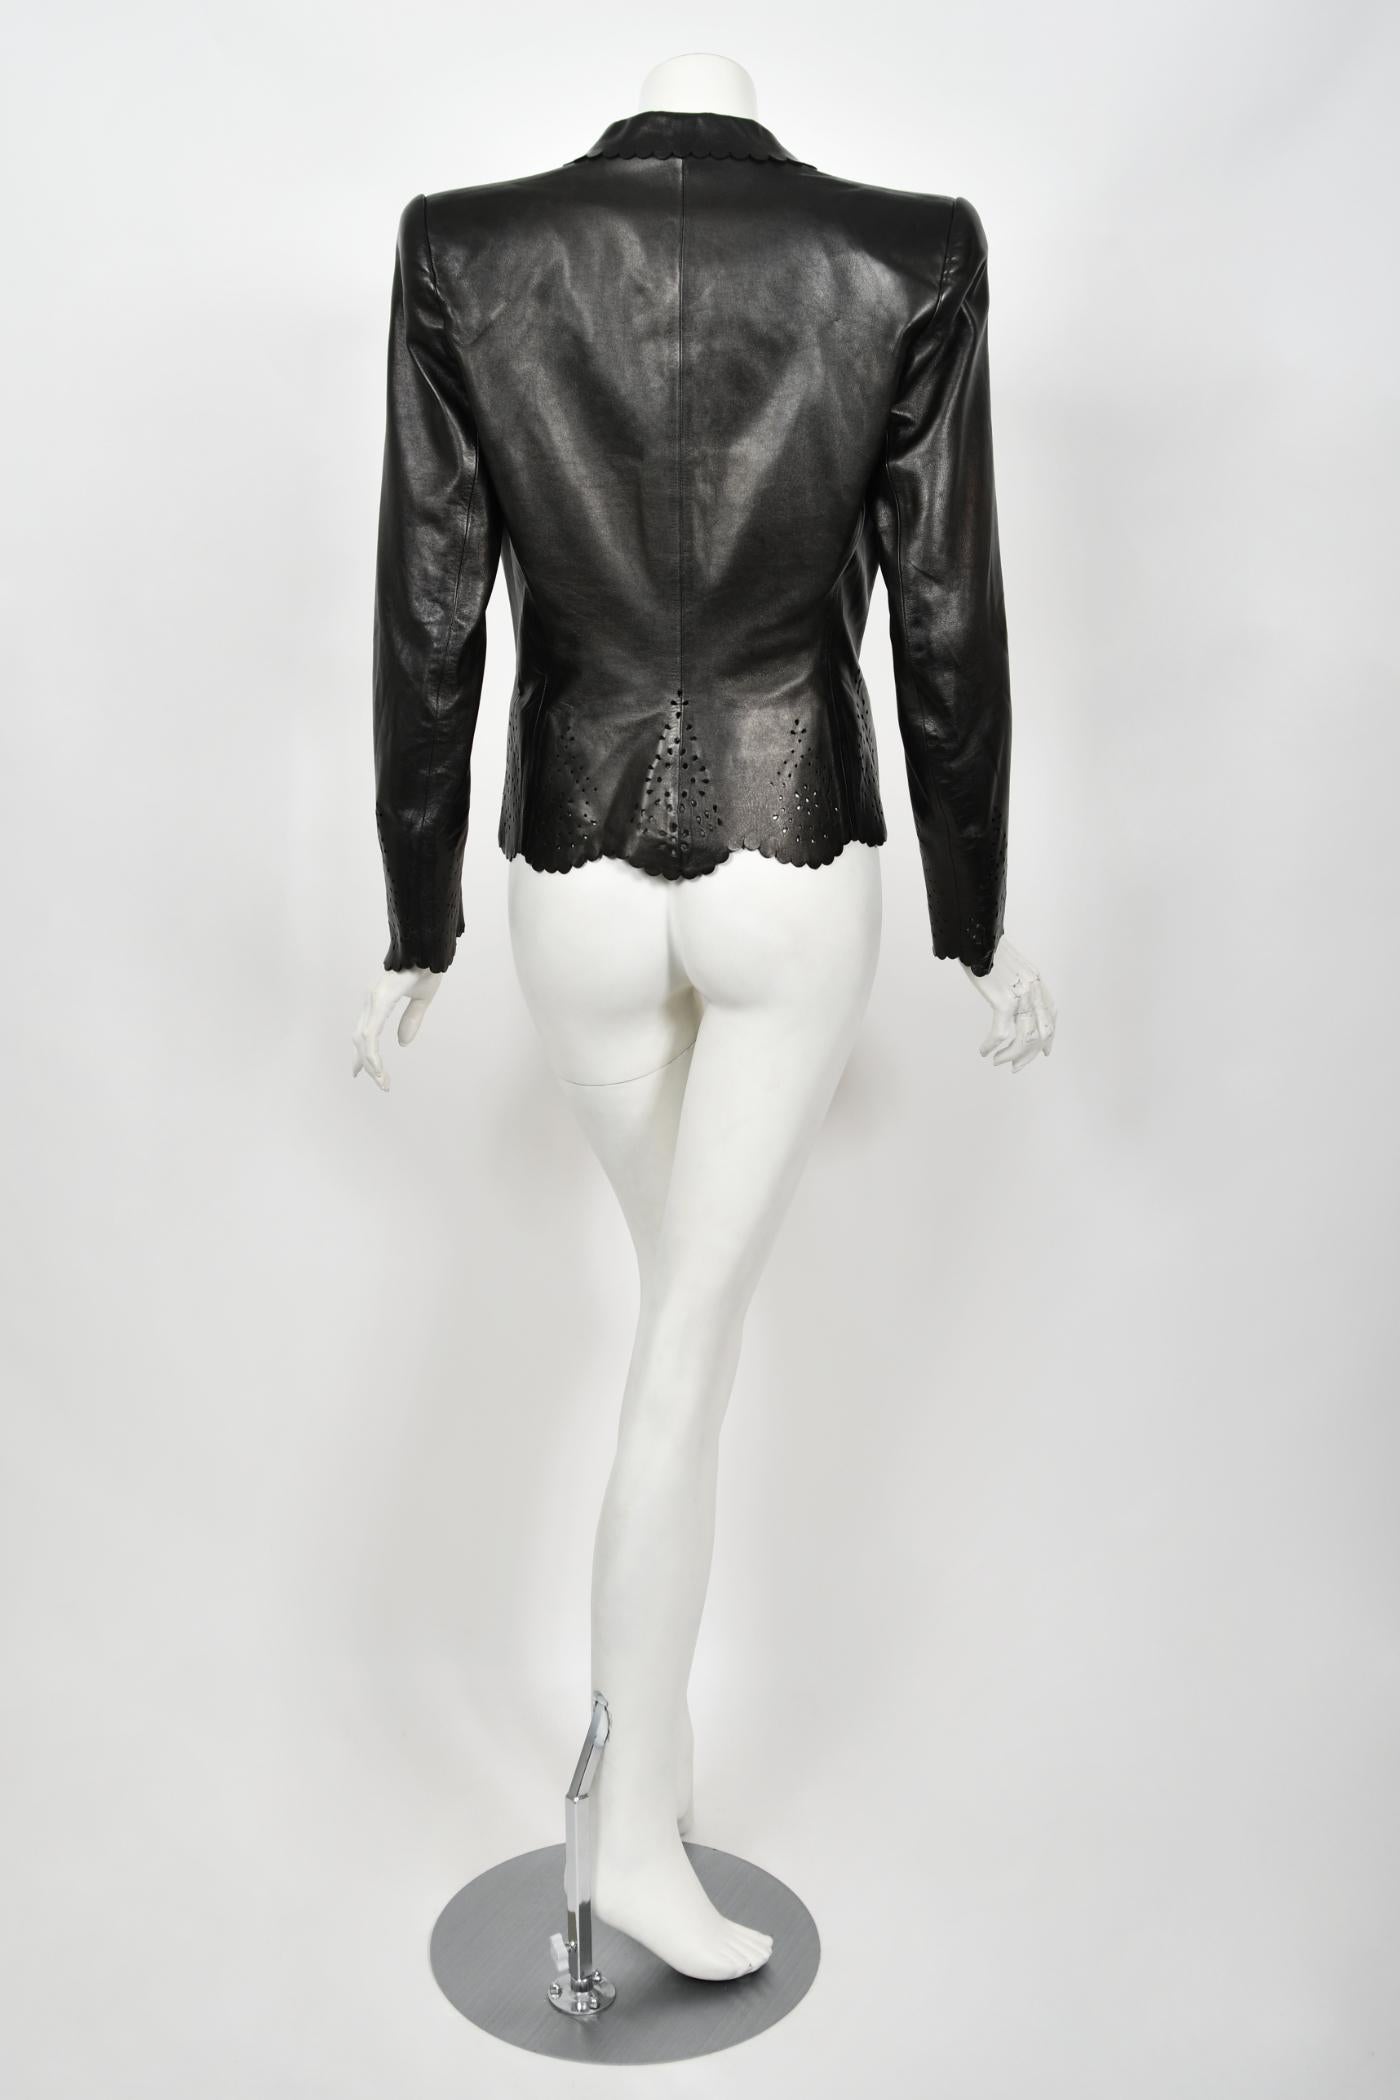 1997 Alexander Mcqueen for Givenchy Runway Black Leather Cutwork Blazer Jacket 9